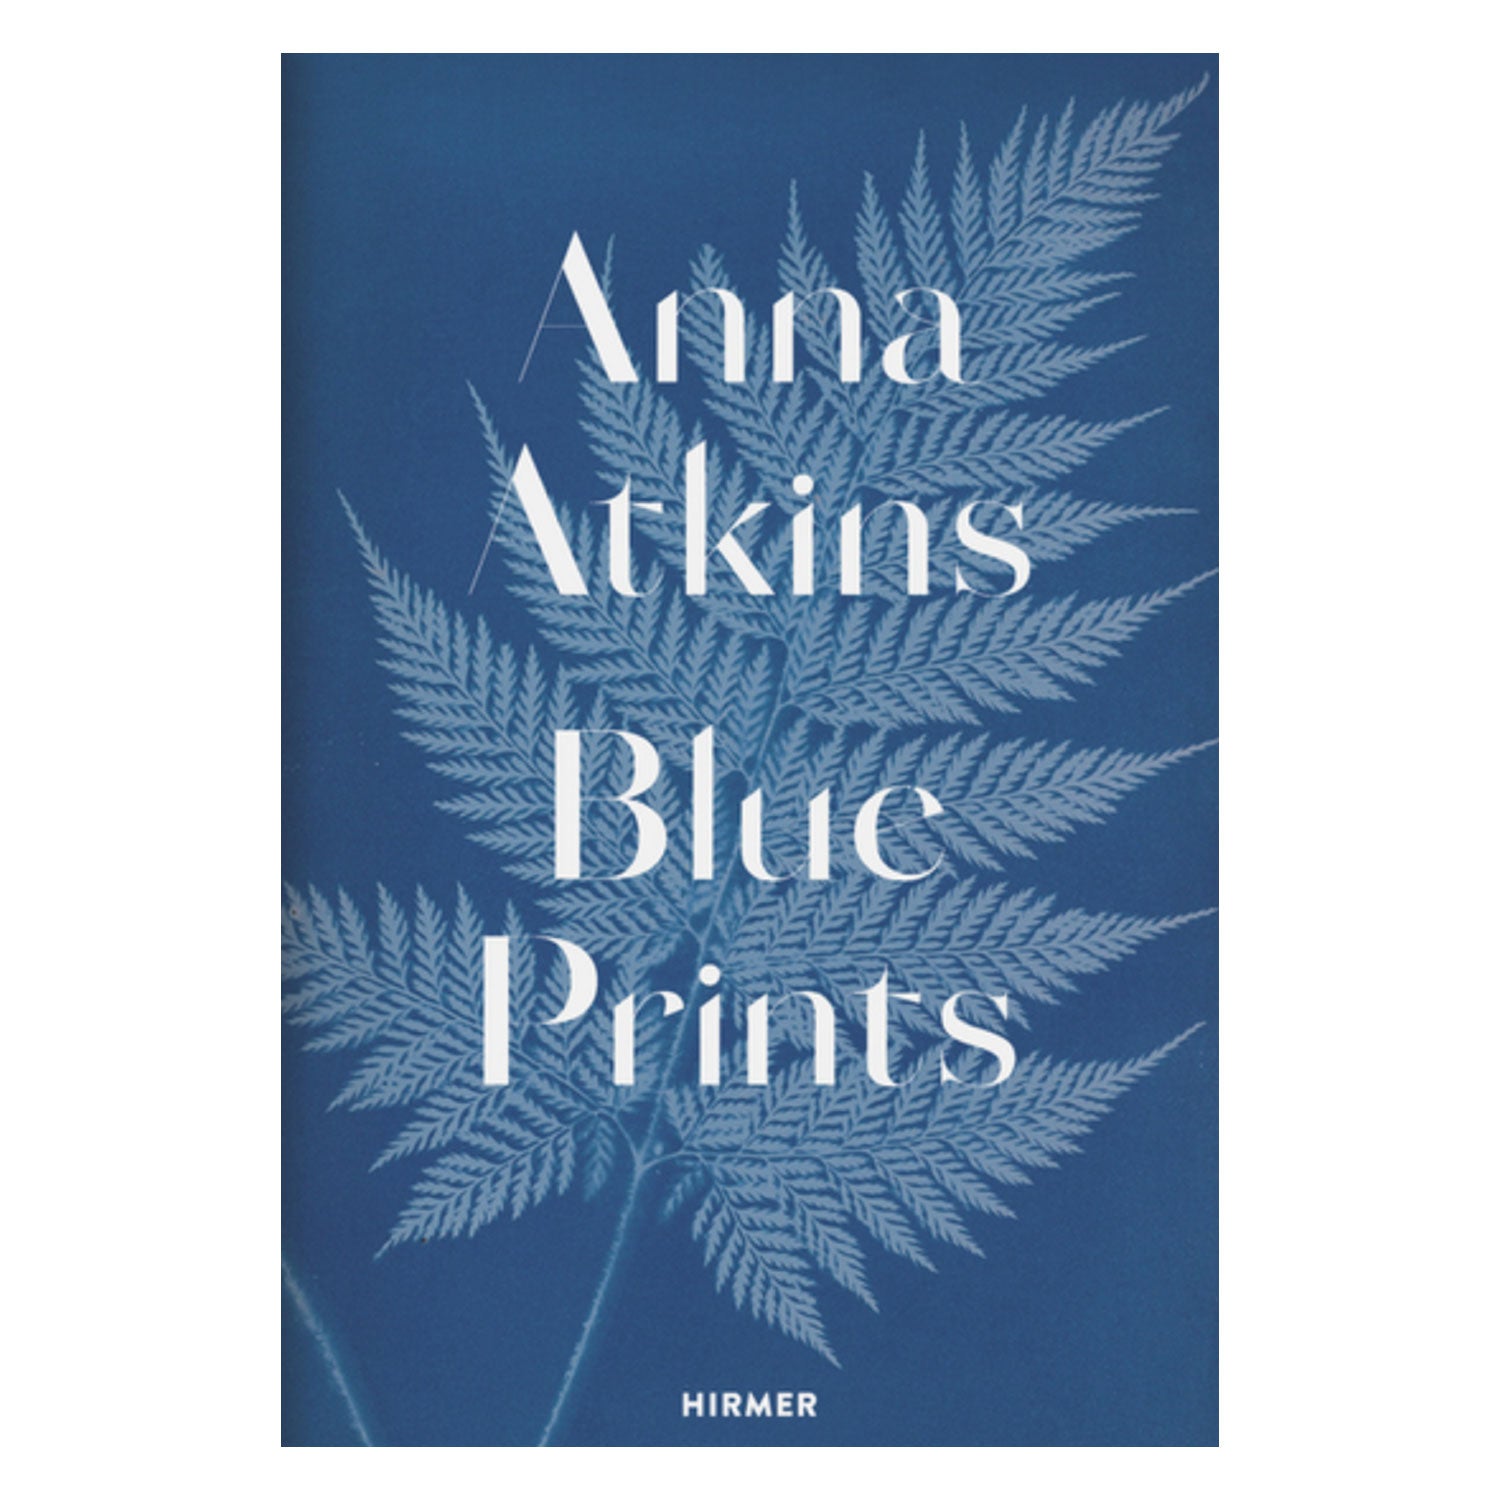 Anna Atkins Blue Prints. Photo Museum Ireland.